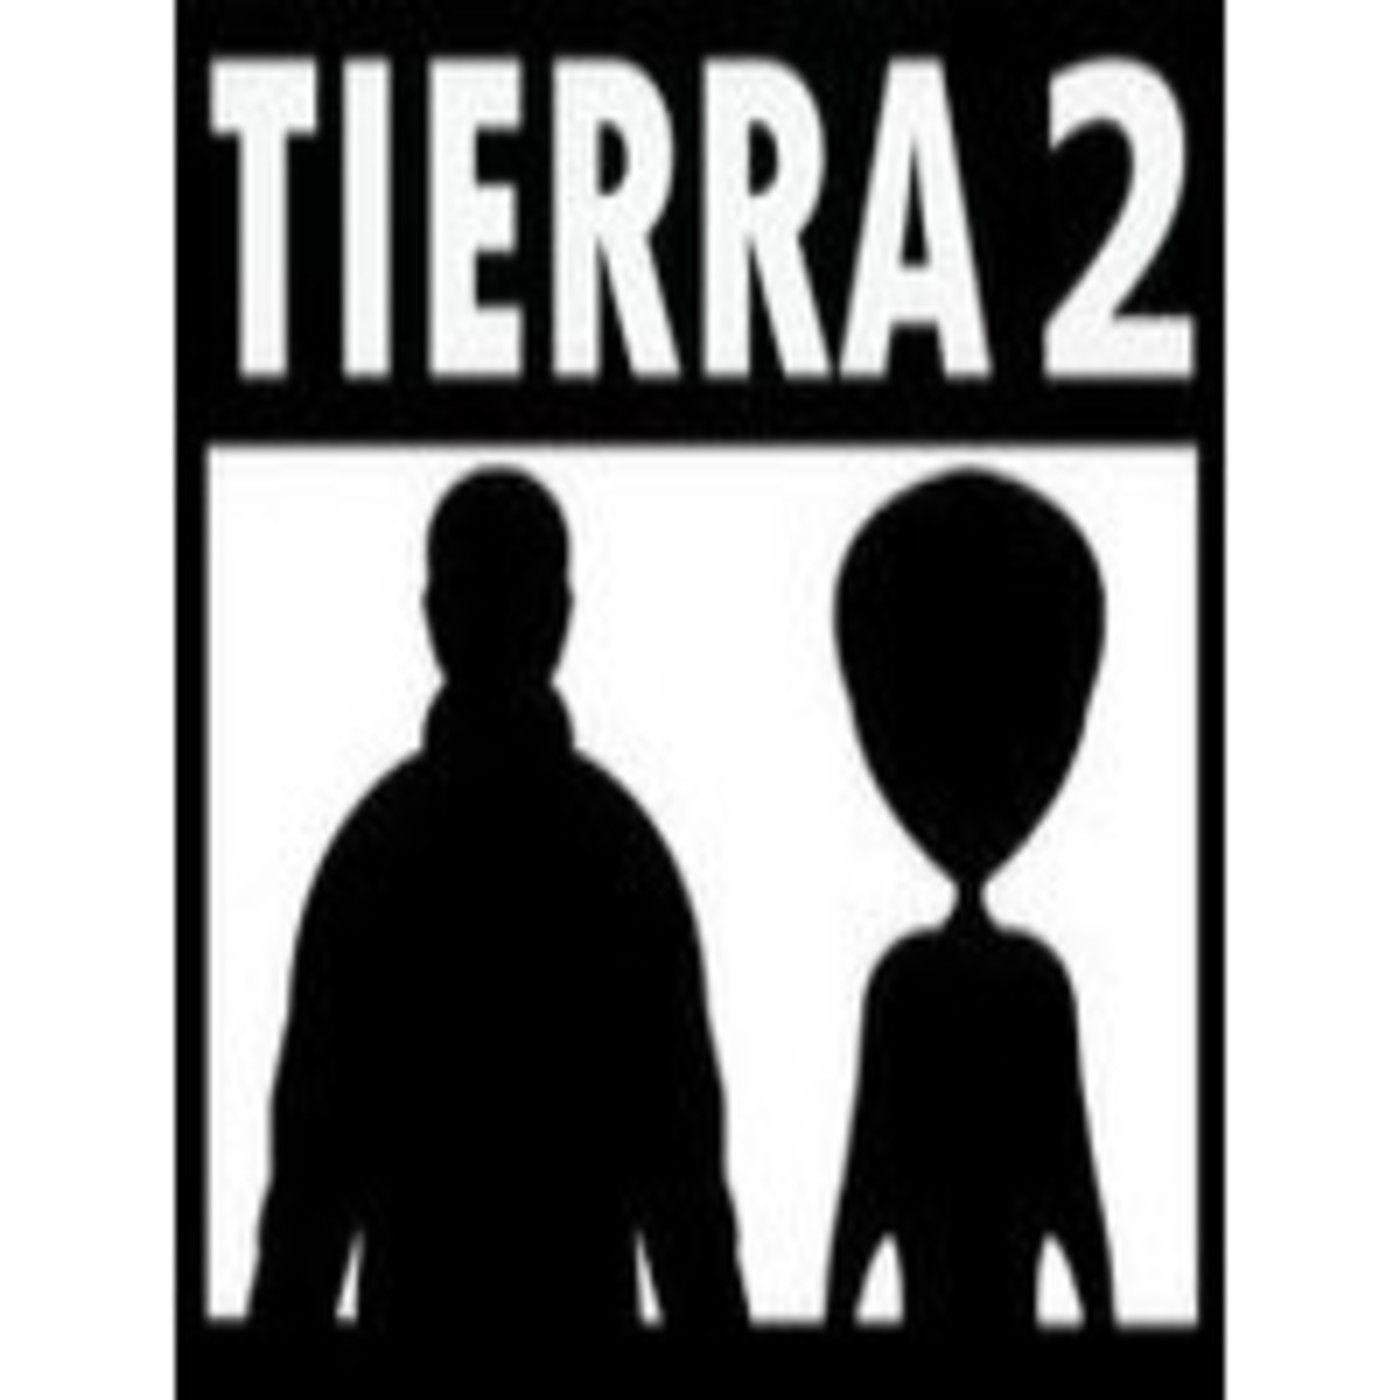 Tierra2 - 19